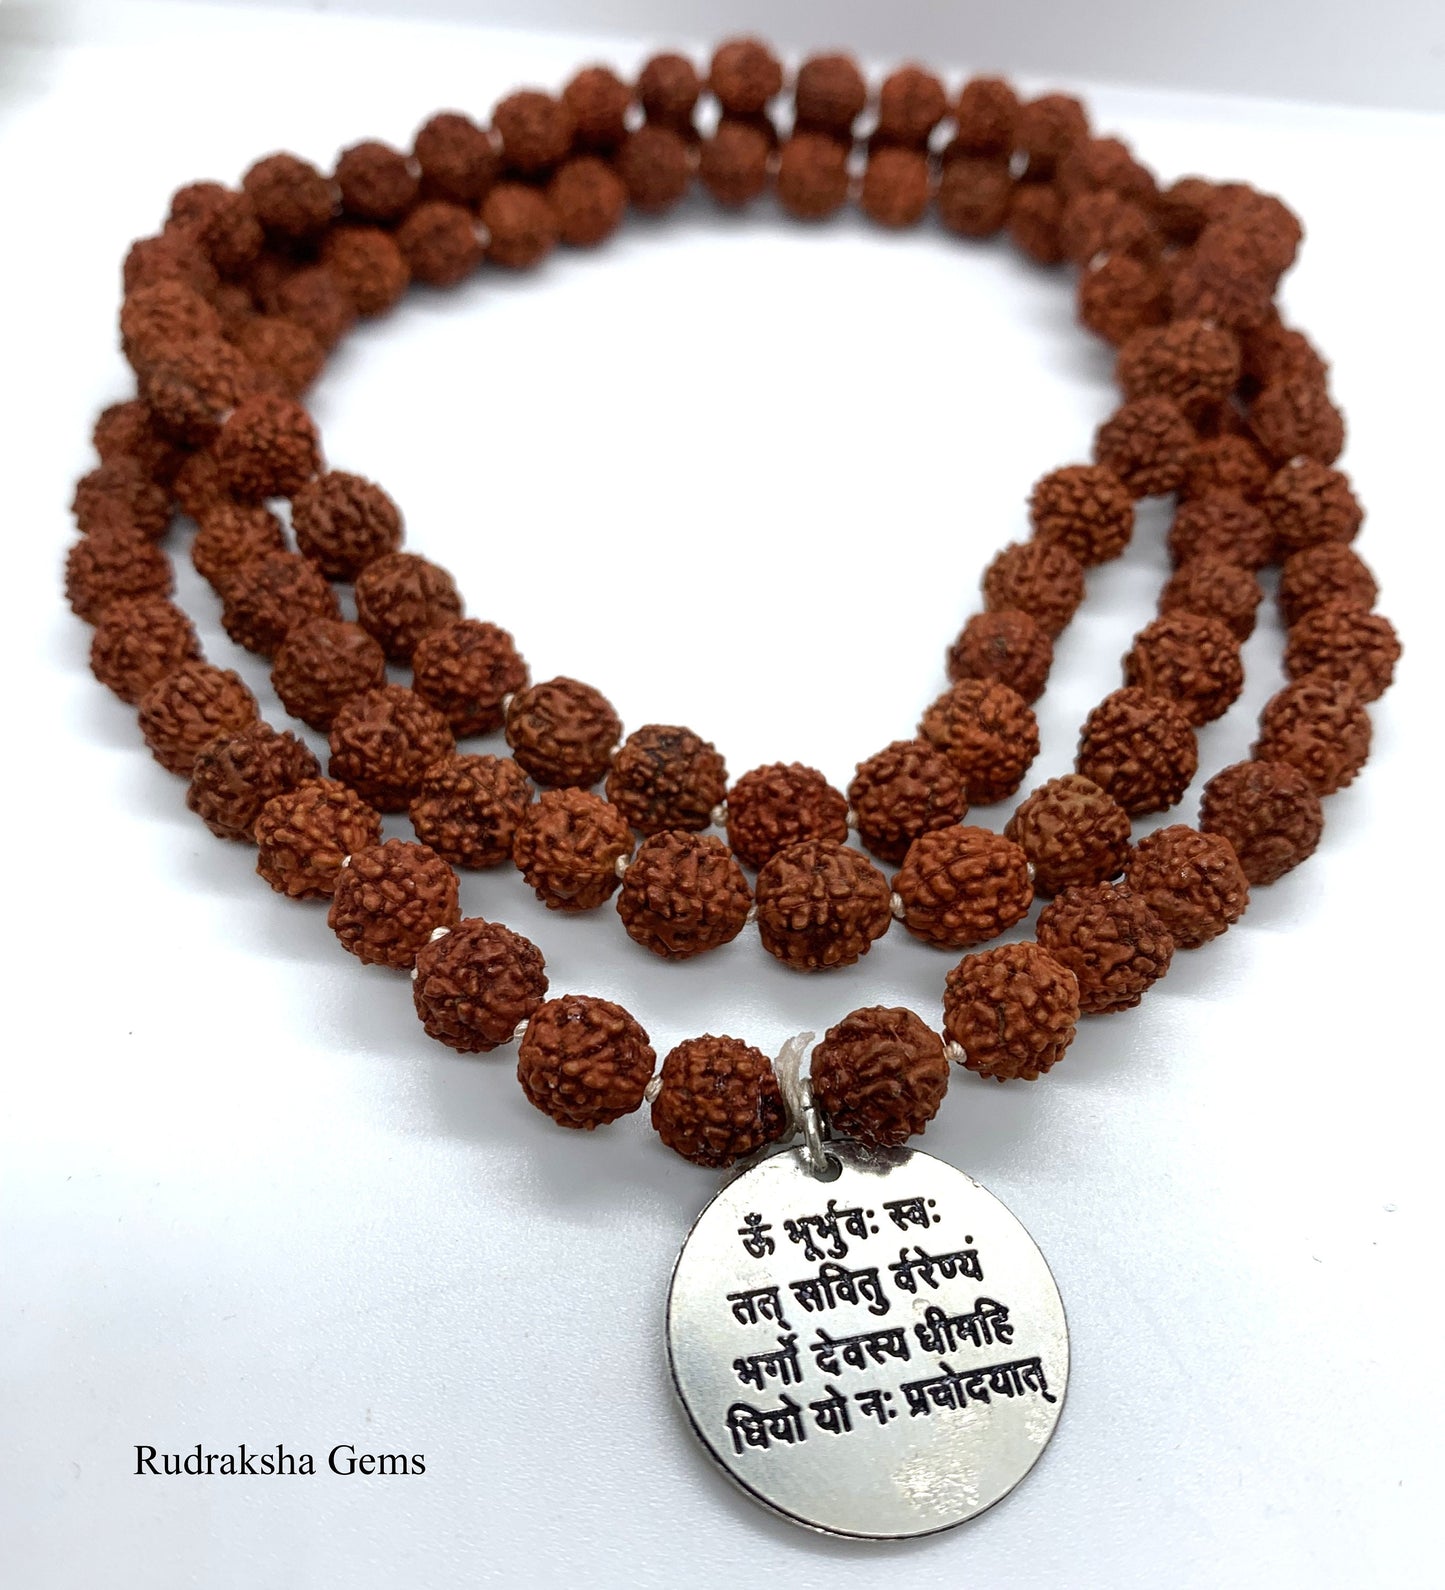 Om Gayatri Mantra Necklace,108 beads,8mm Natural Rudraksha Seed Beads, Buddhist Necklace, Rudraksha Necklace, Unisex,Prayer,Mala,Meditation